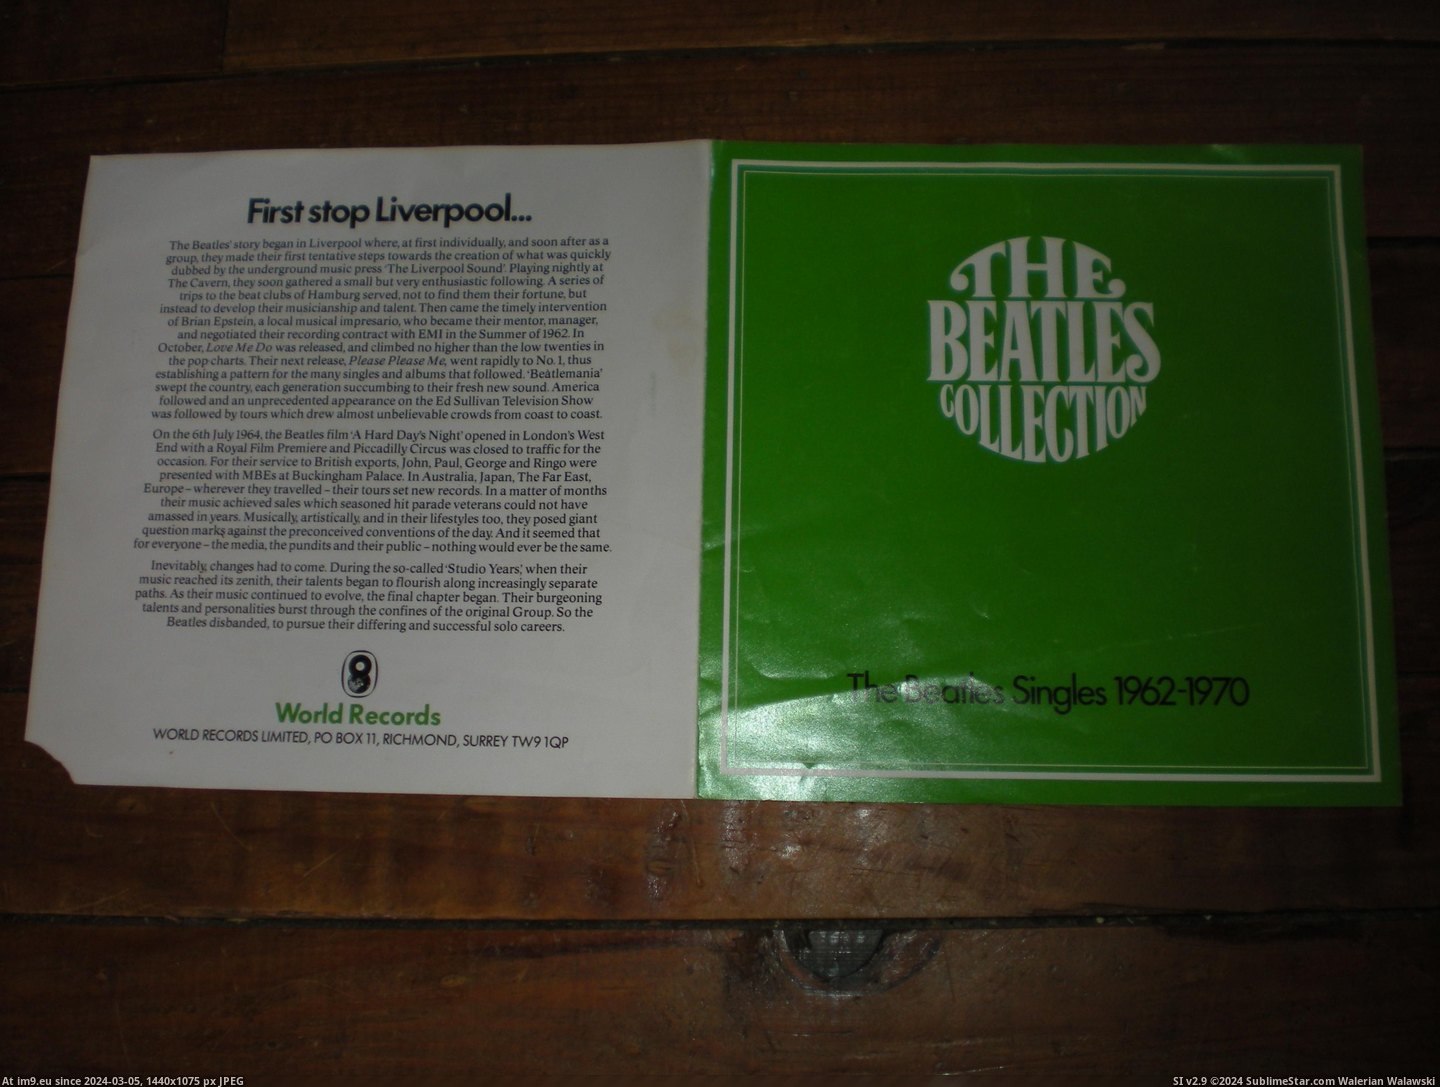 #Collection #Beatles #Box Beatles Collection Box 9.1 Pic. (Изображение из альбом new 1))